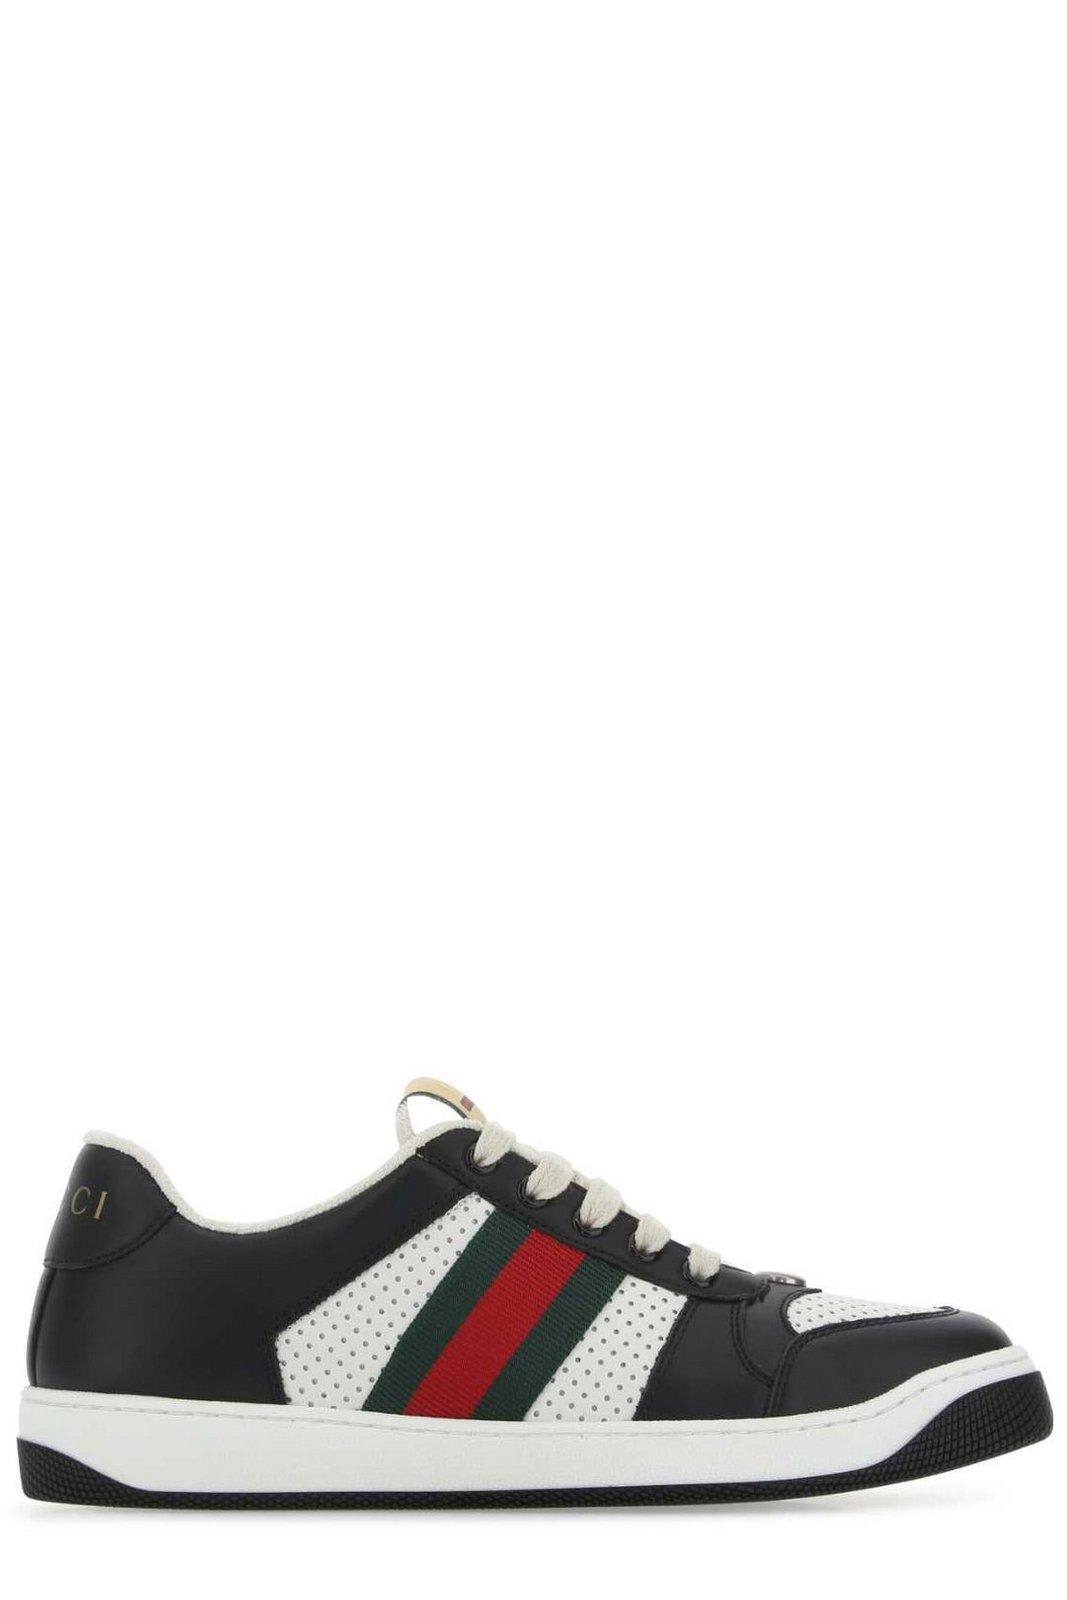 Gucci Screener Web Stripe Lace-up Sneakers